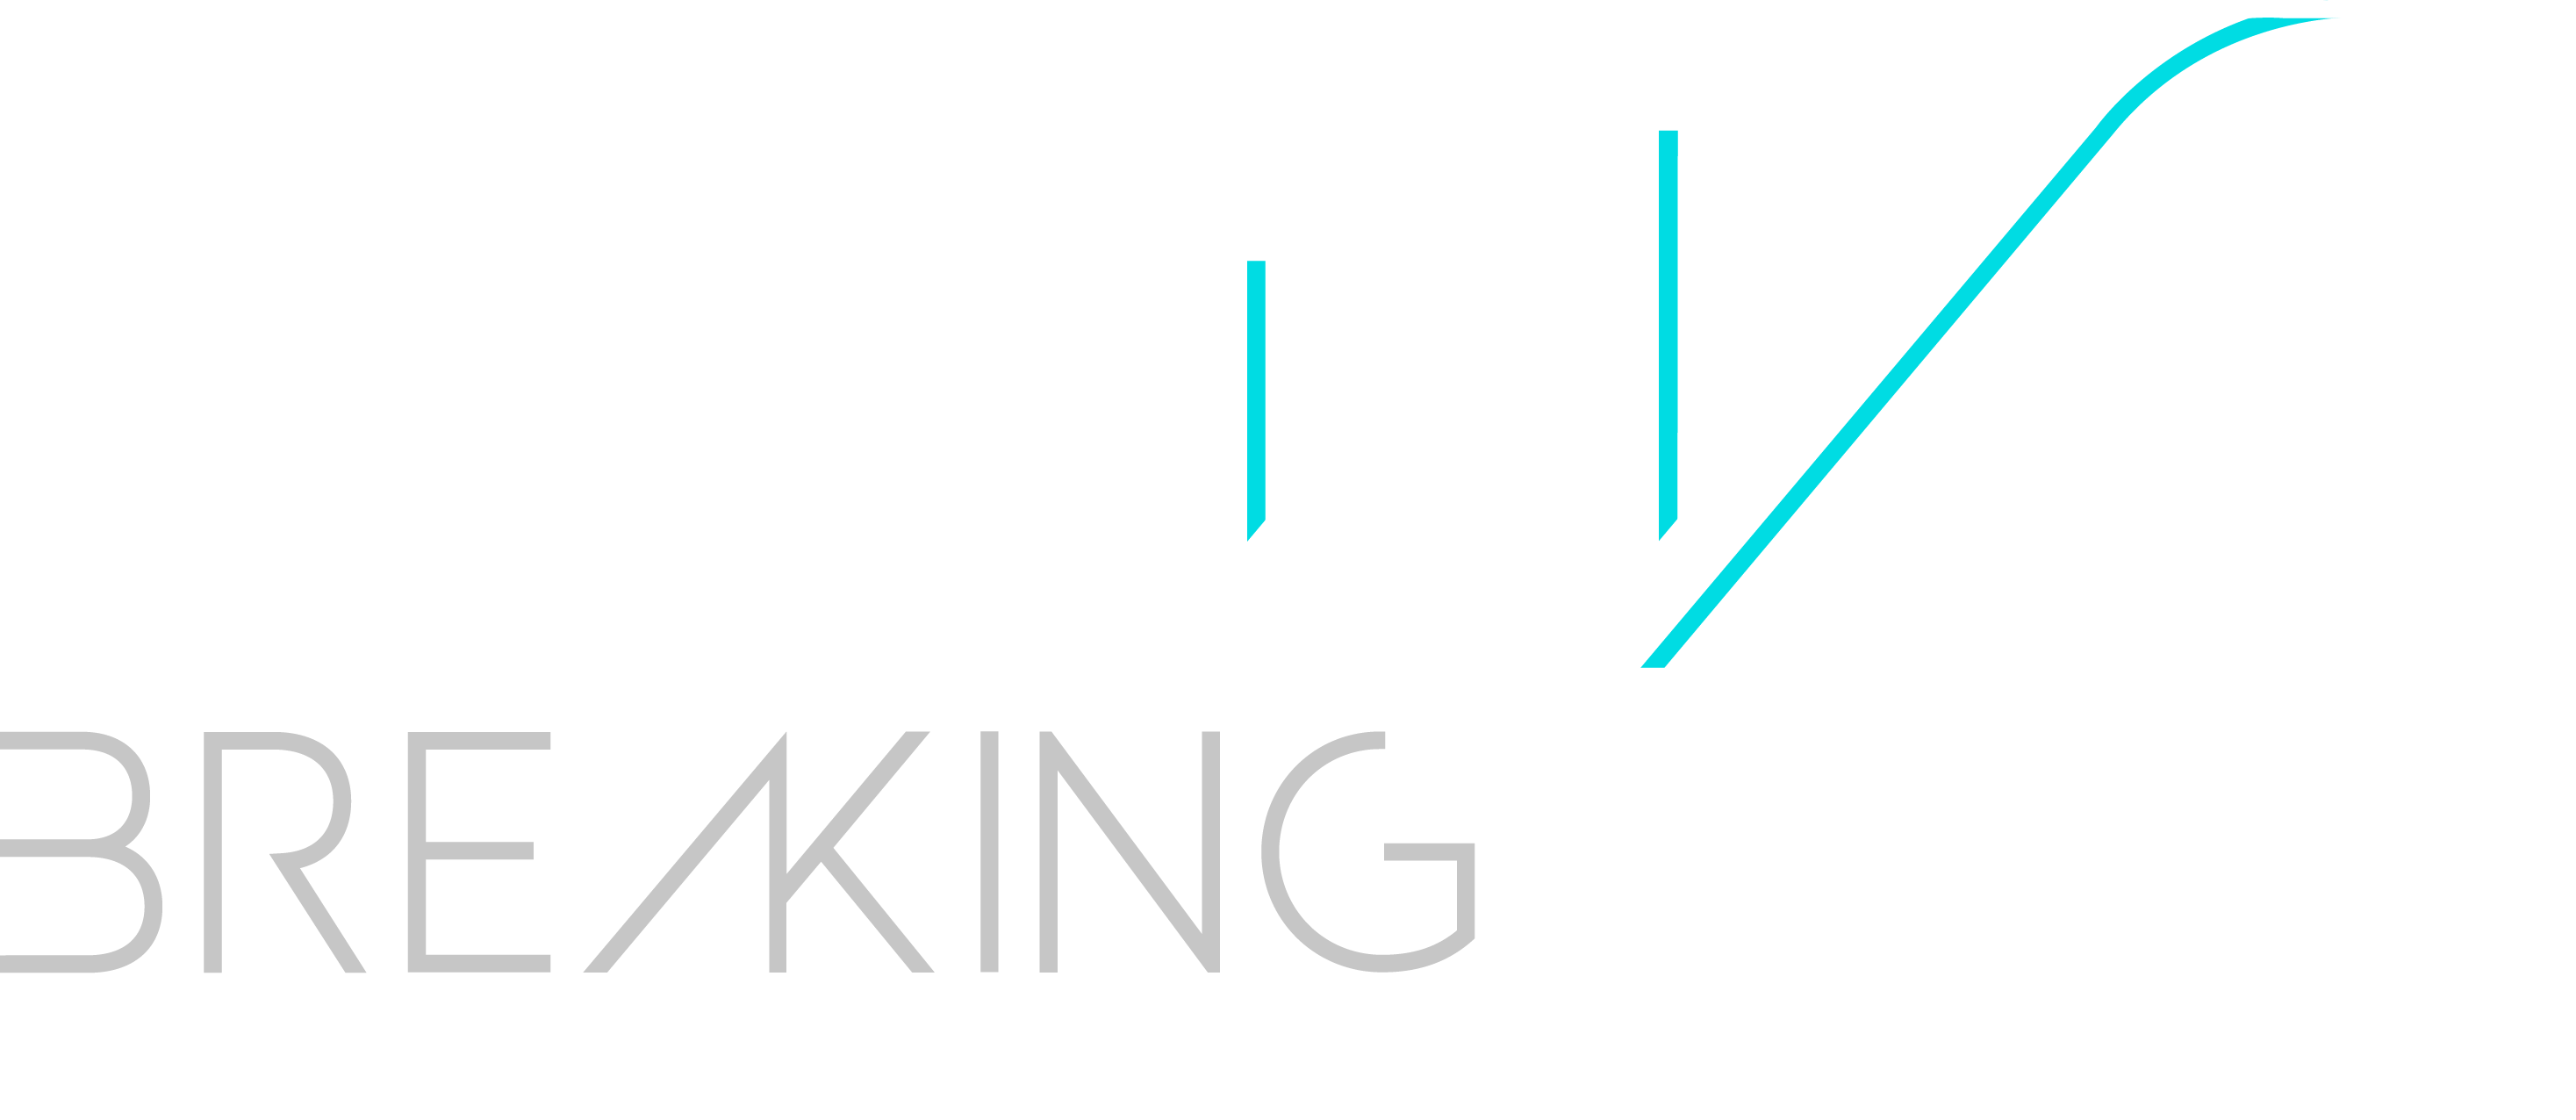 Breaking Waves Creative Sound Agency